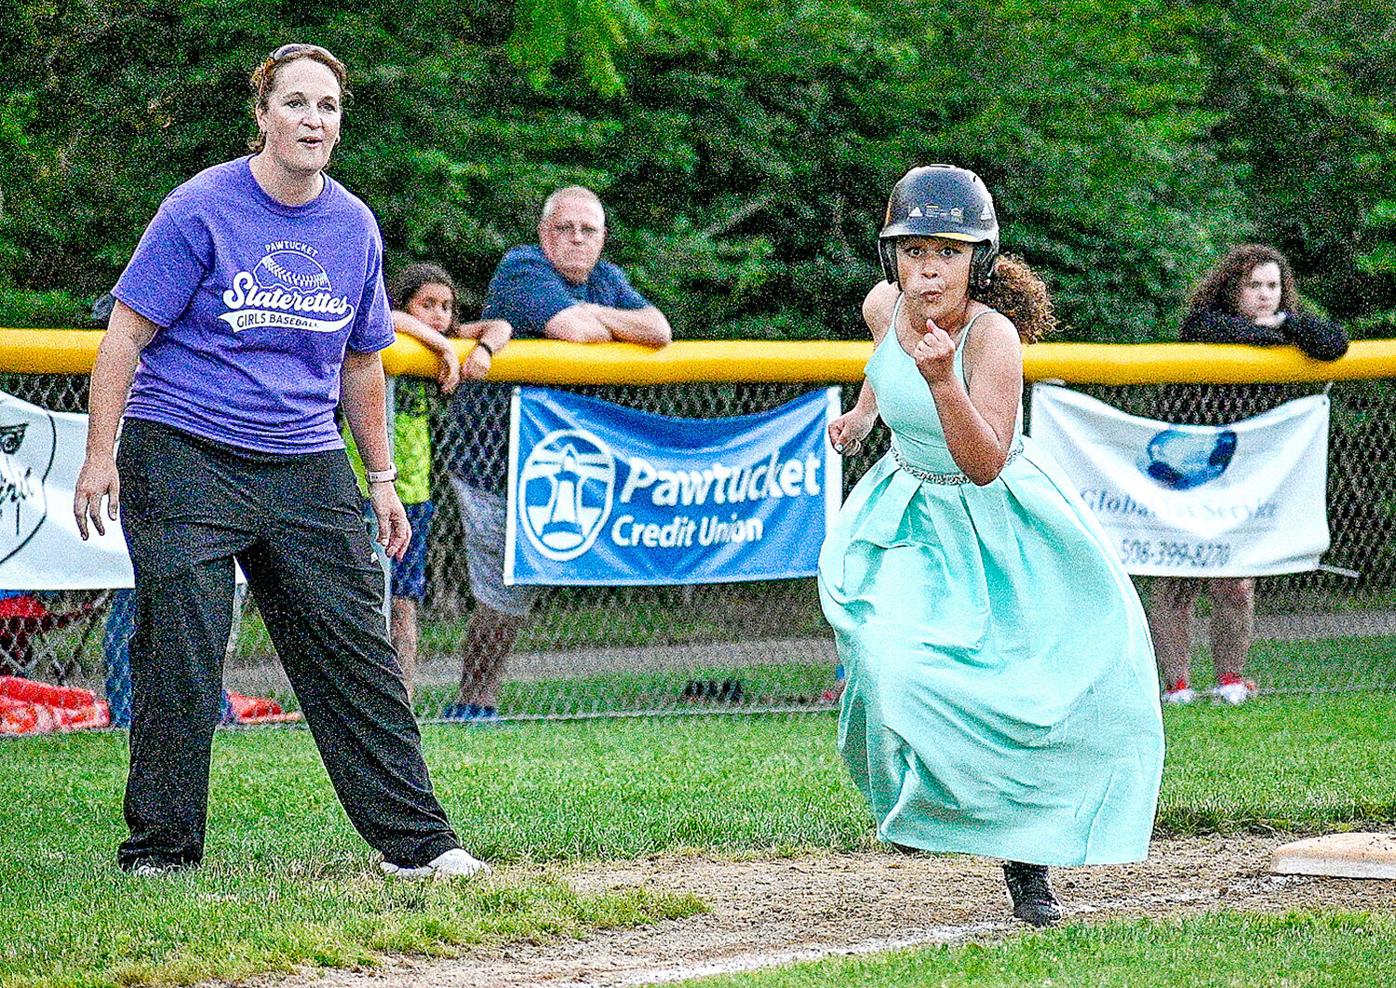 Slaterettes Baseball’s Dresses on the Diamond event